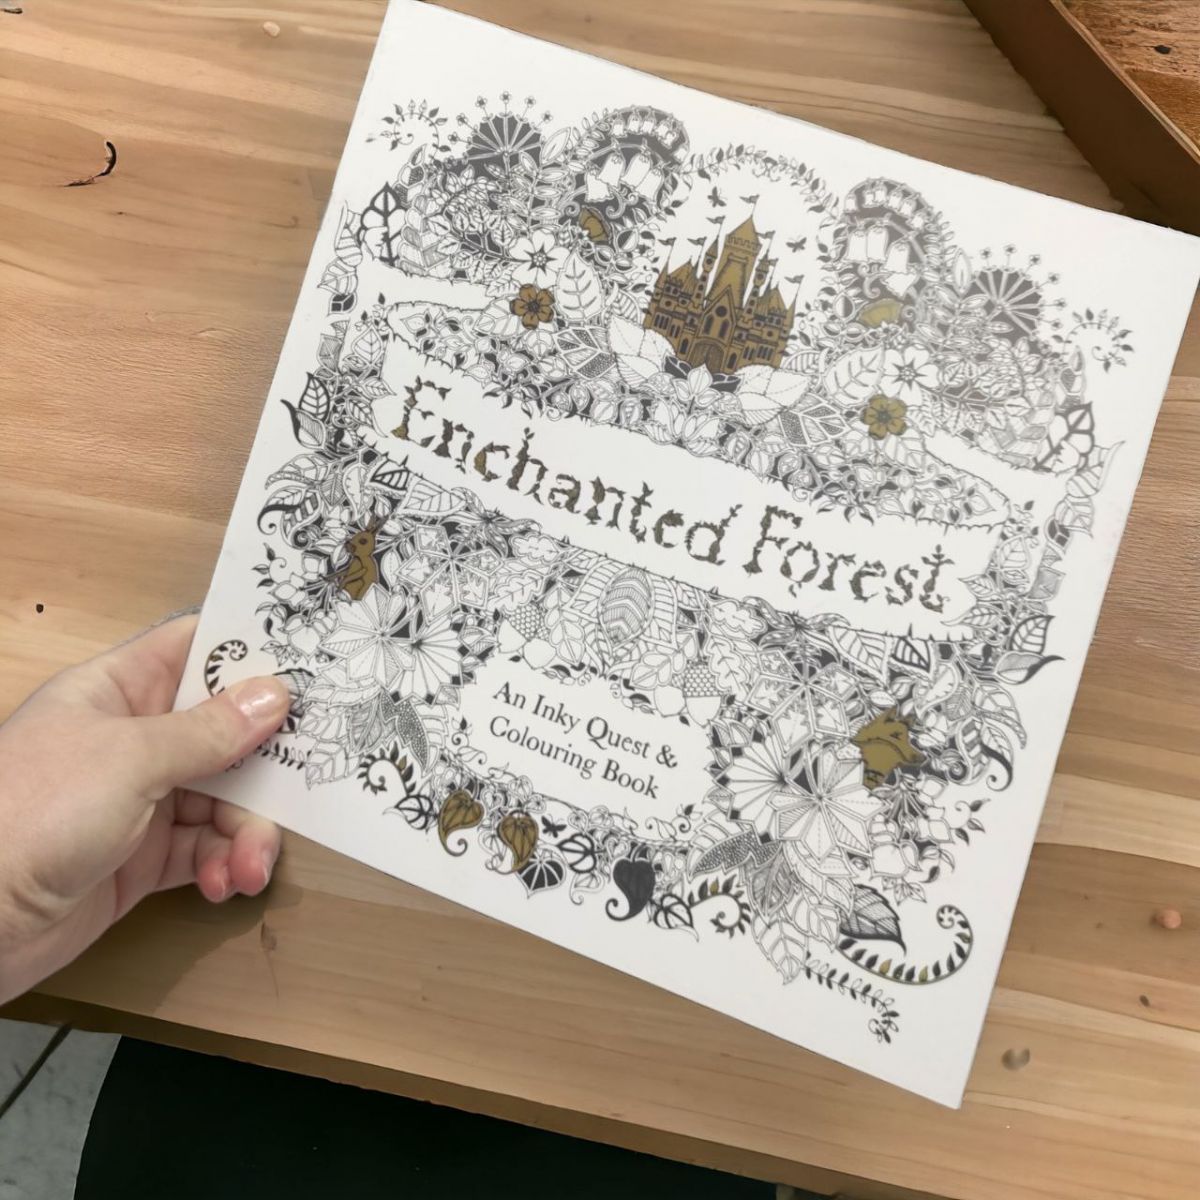 Раскраска-антистресс "Enchanted Forest"